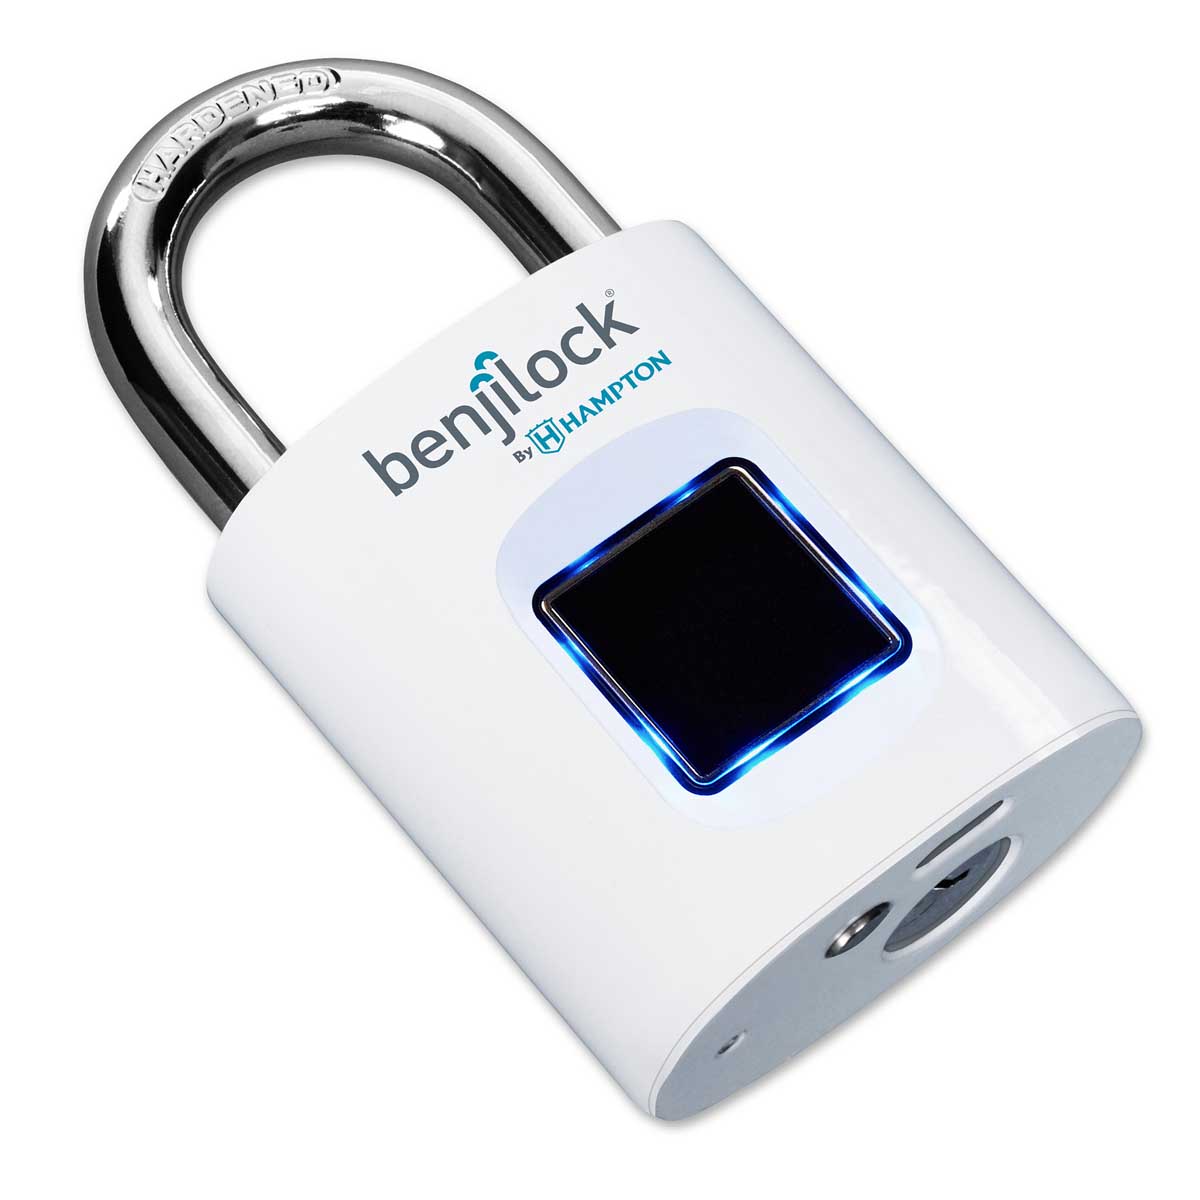 BenjiLock by Hampton is a Biometric bicycle U-lock, unlocked by your fingerprint